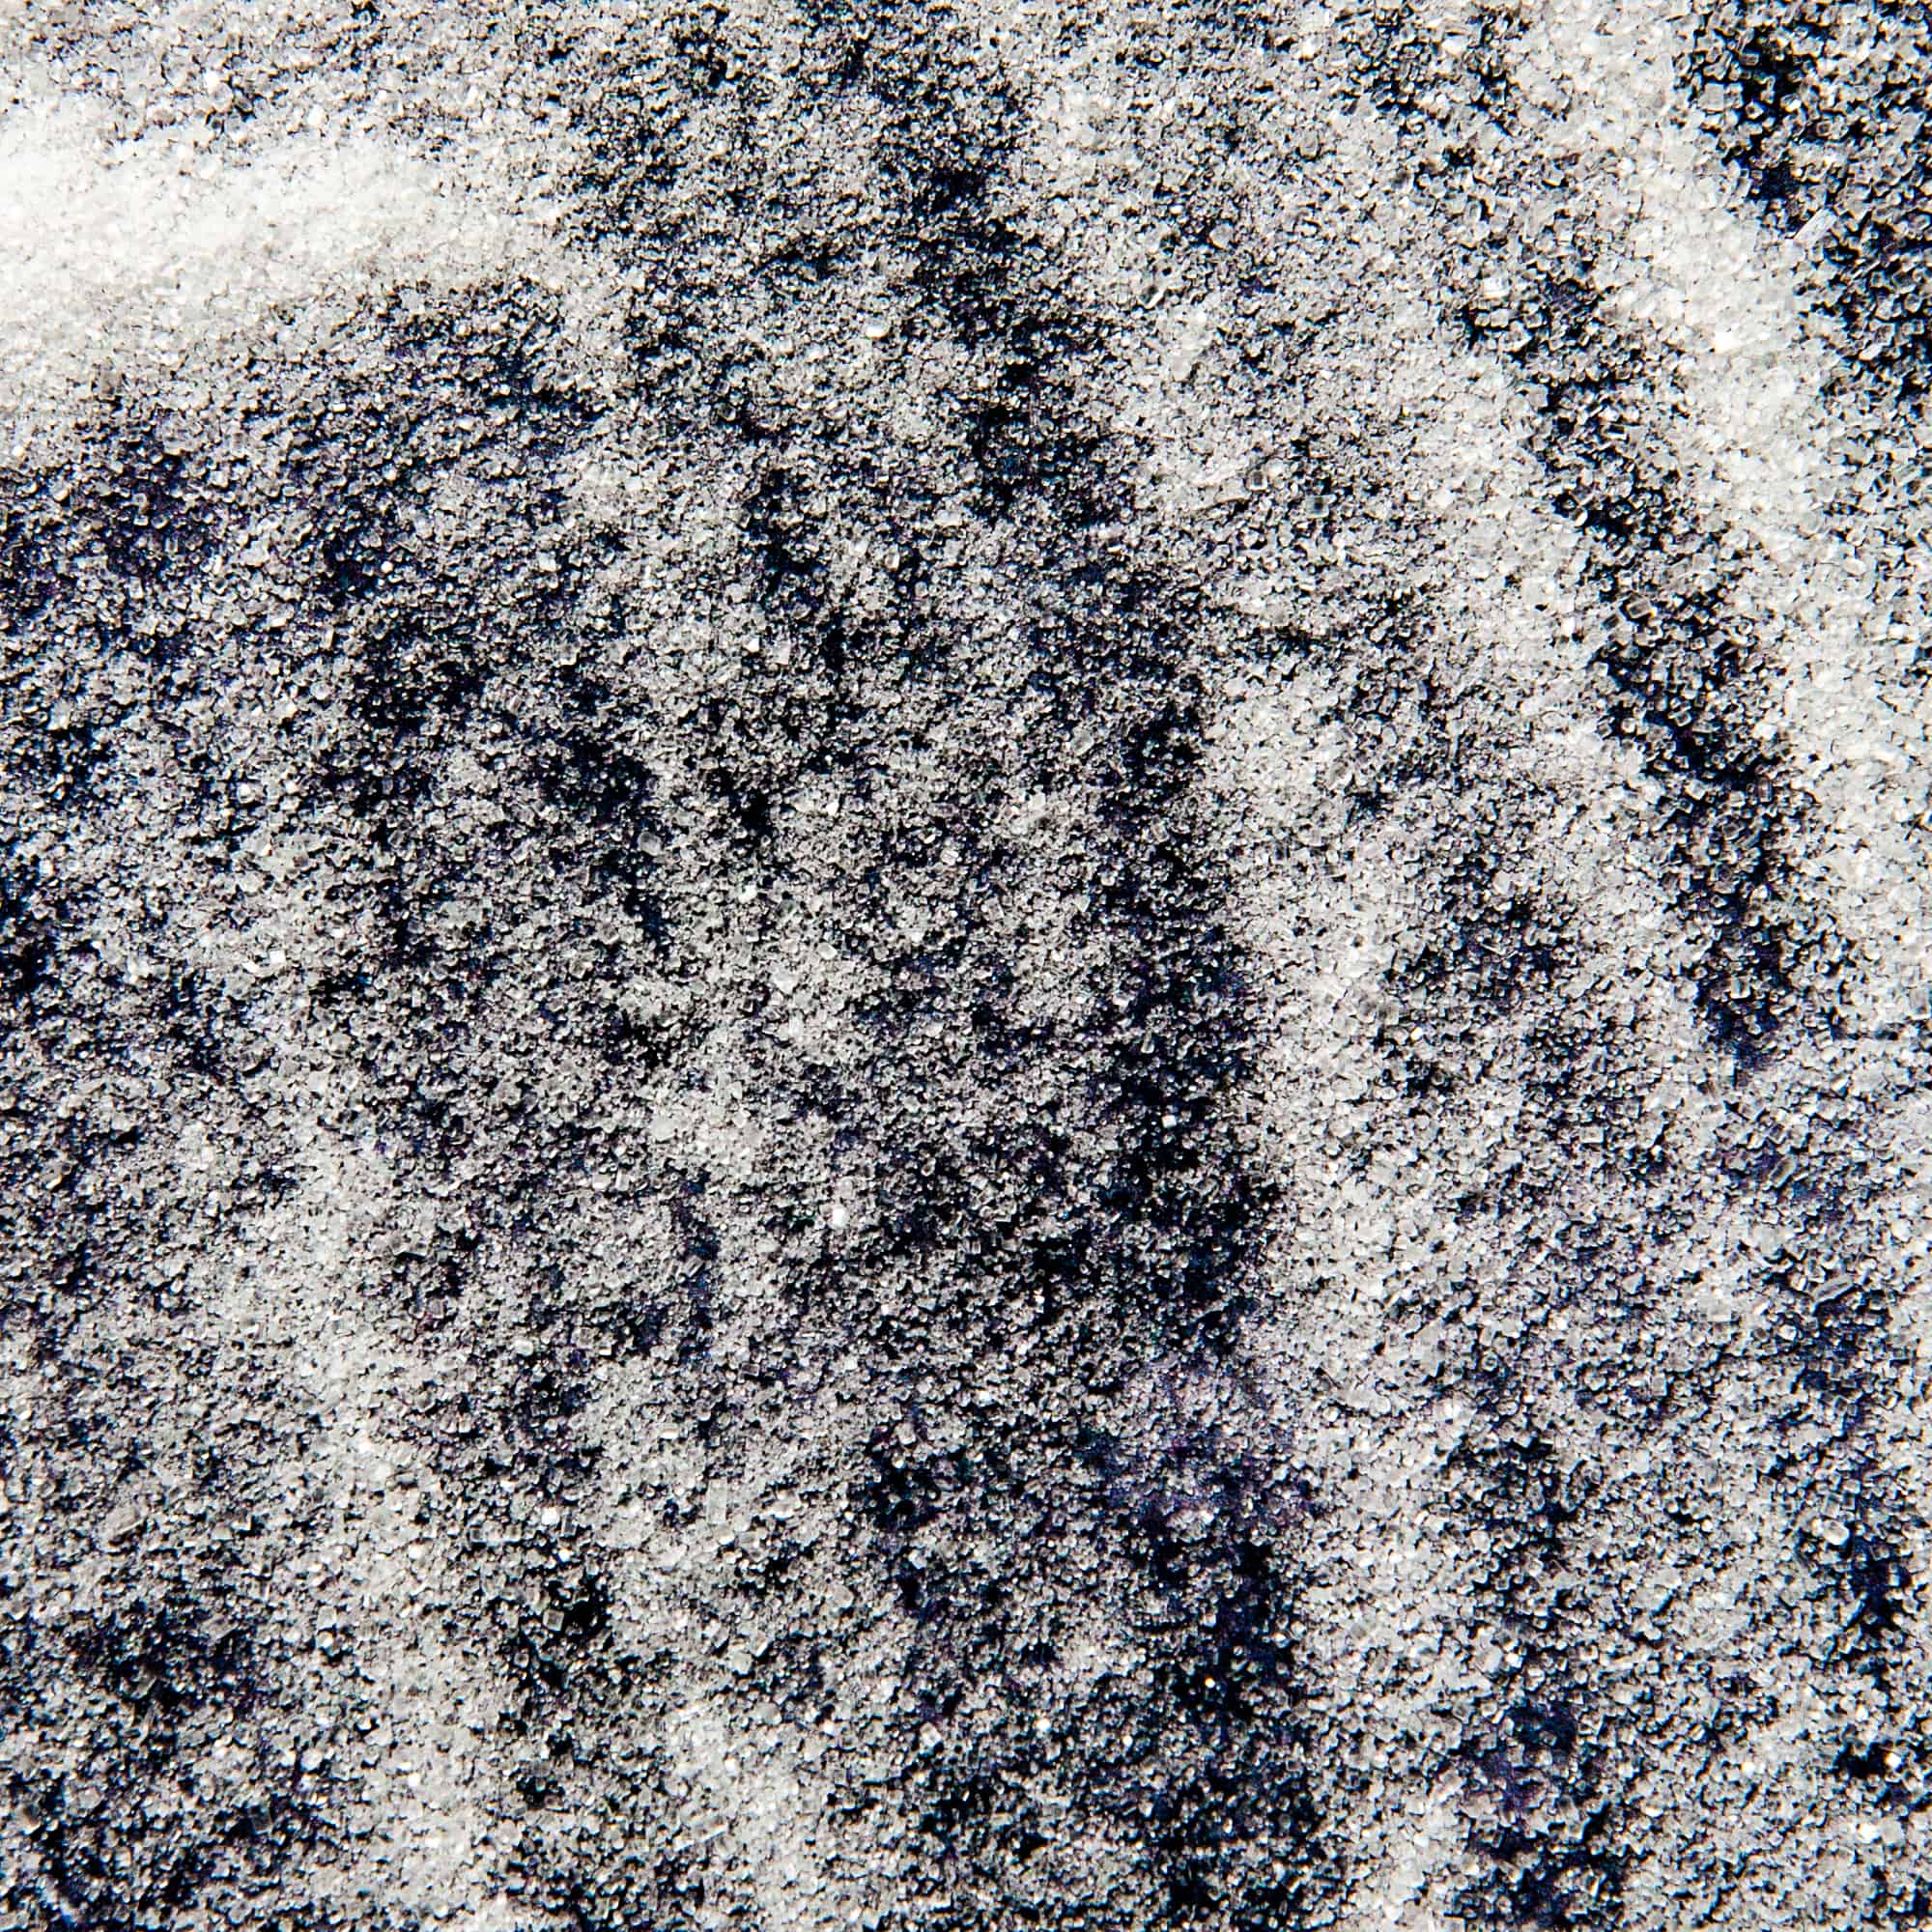 up close texture of granulated sugar